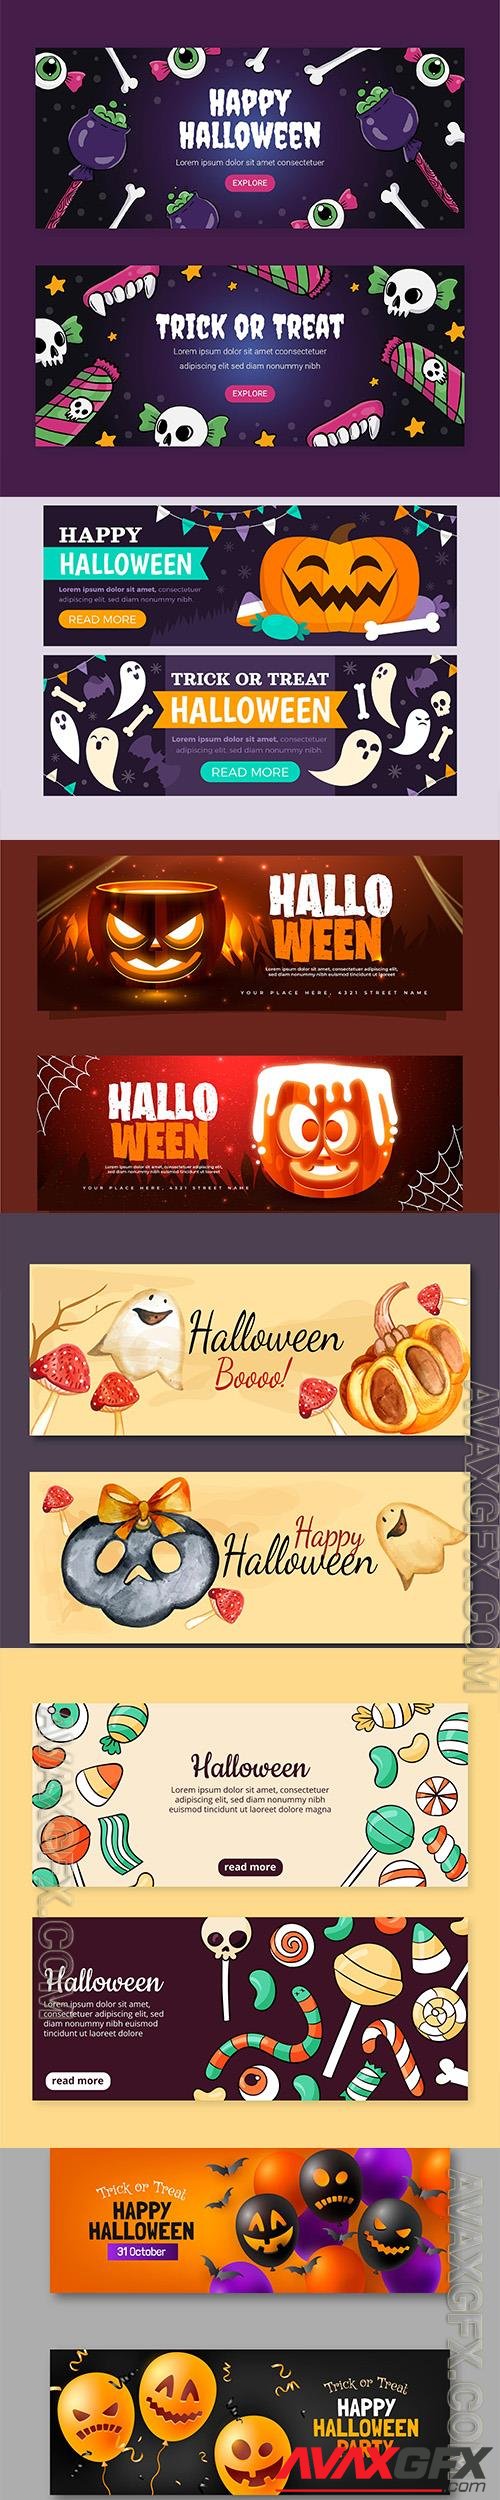 Realistic halloween horizontal sale banners set vol 2